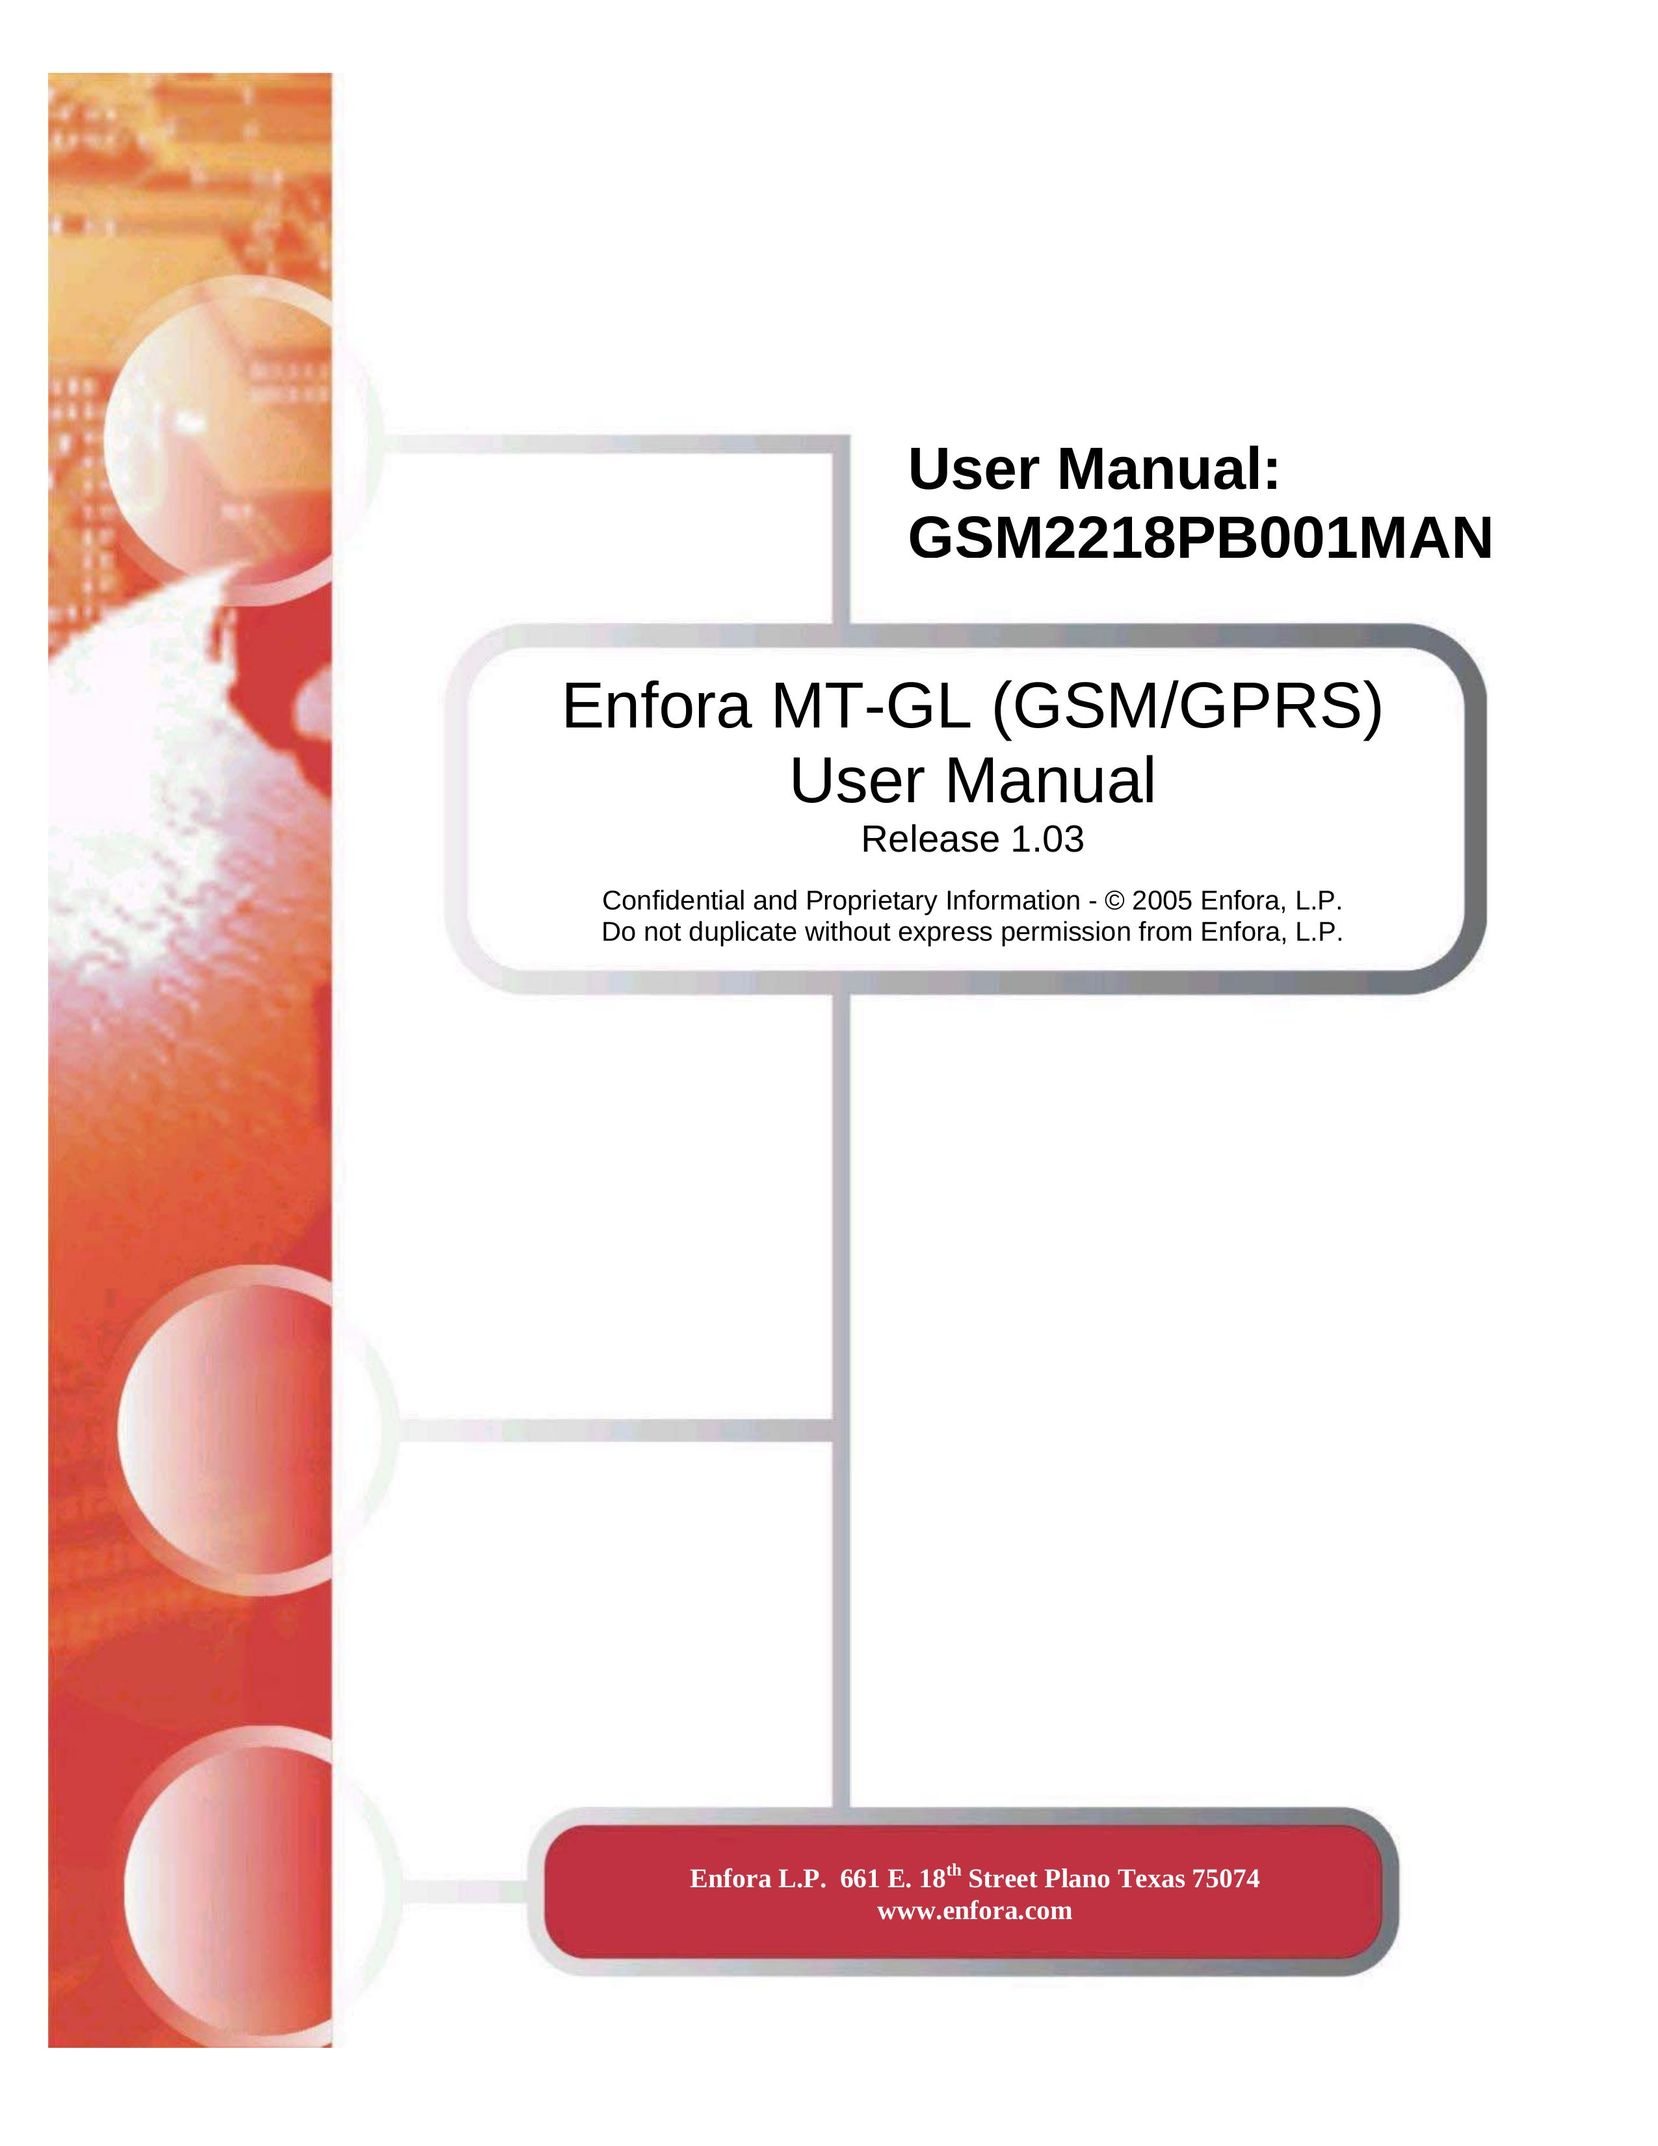 Enfora GSM2218 Network Card User Manual